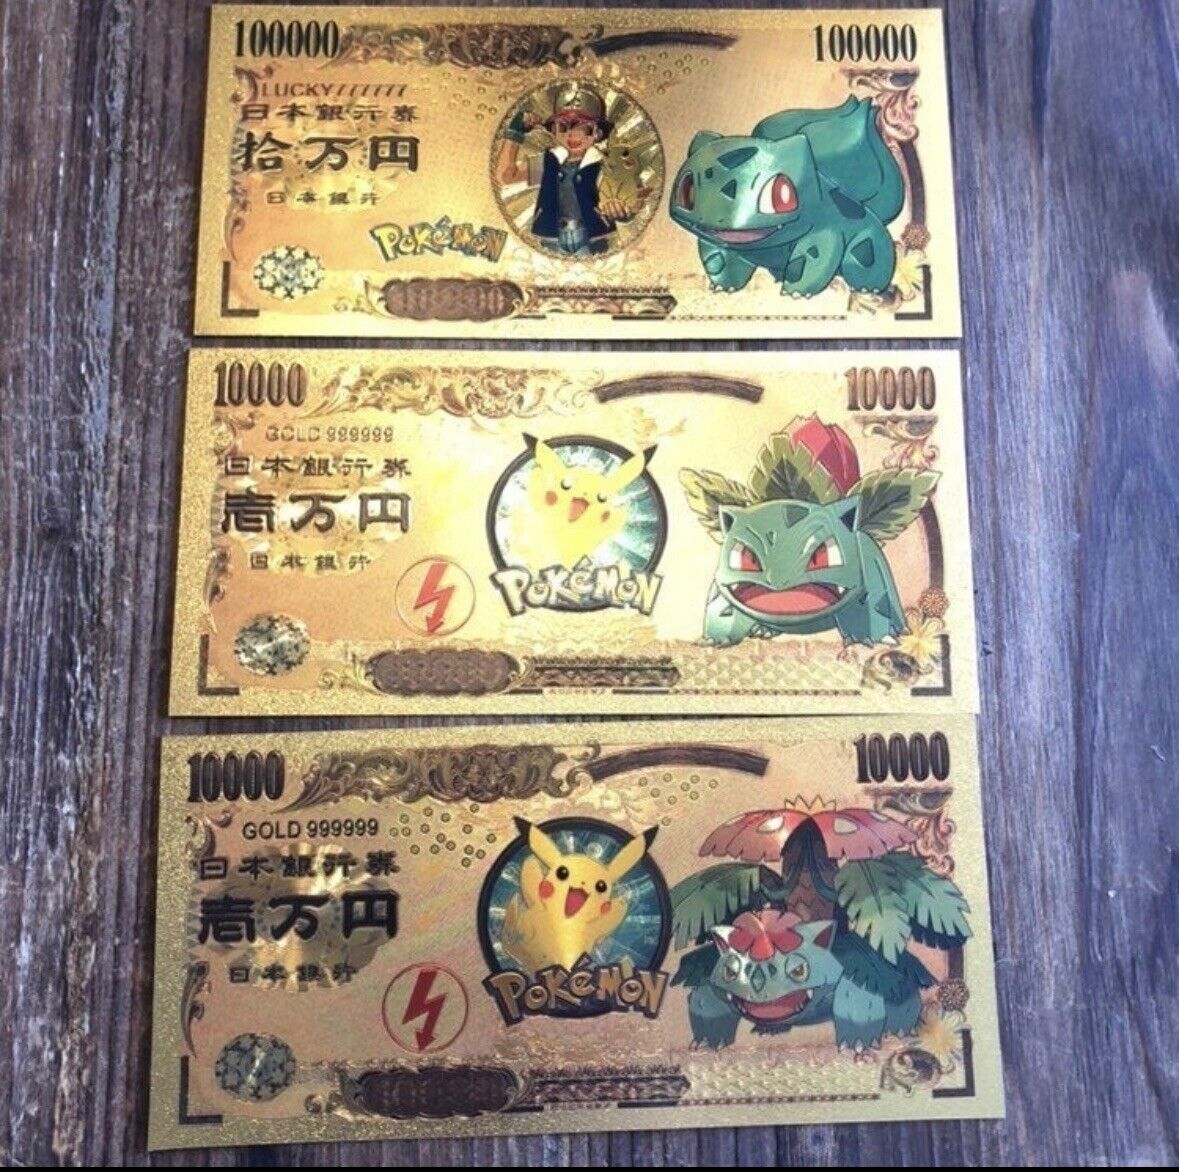 24k Gold Foil Plated Bulbasaur Evolution Pokemon Banknote Set Anime Collectible